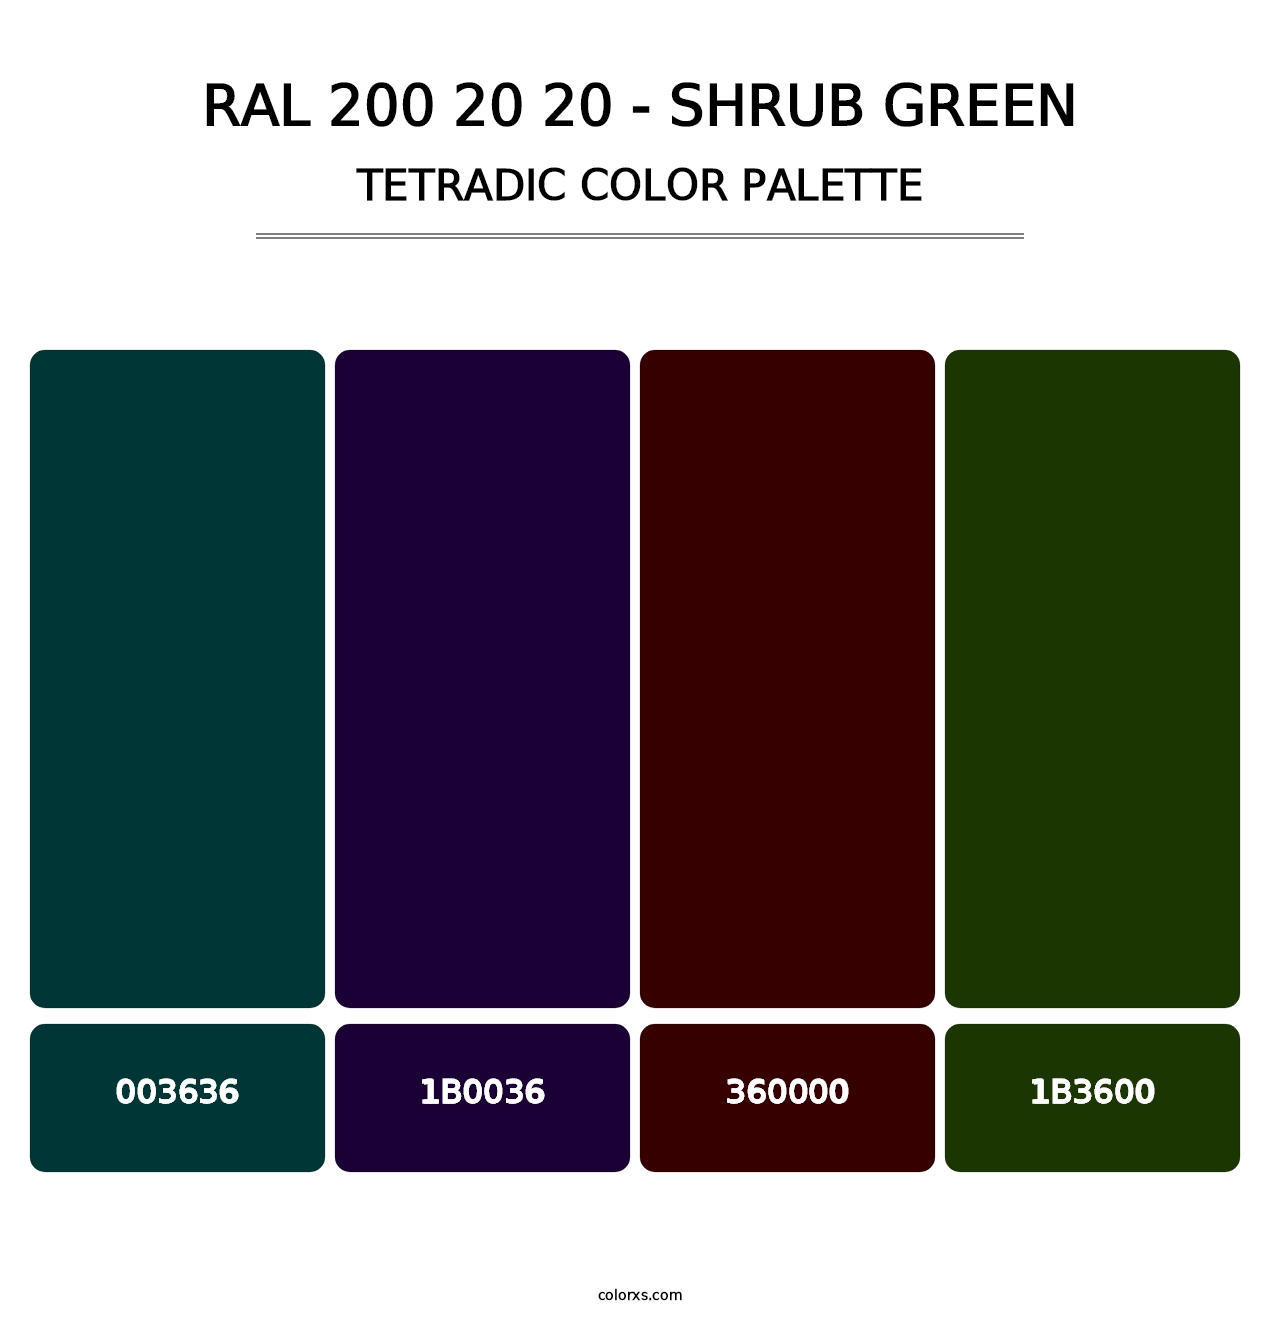 RAL 200 20 20 - Shrub Green - Tetradic Color Palette